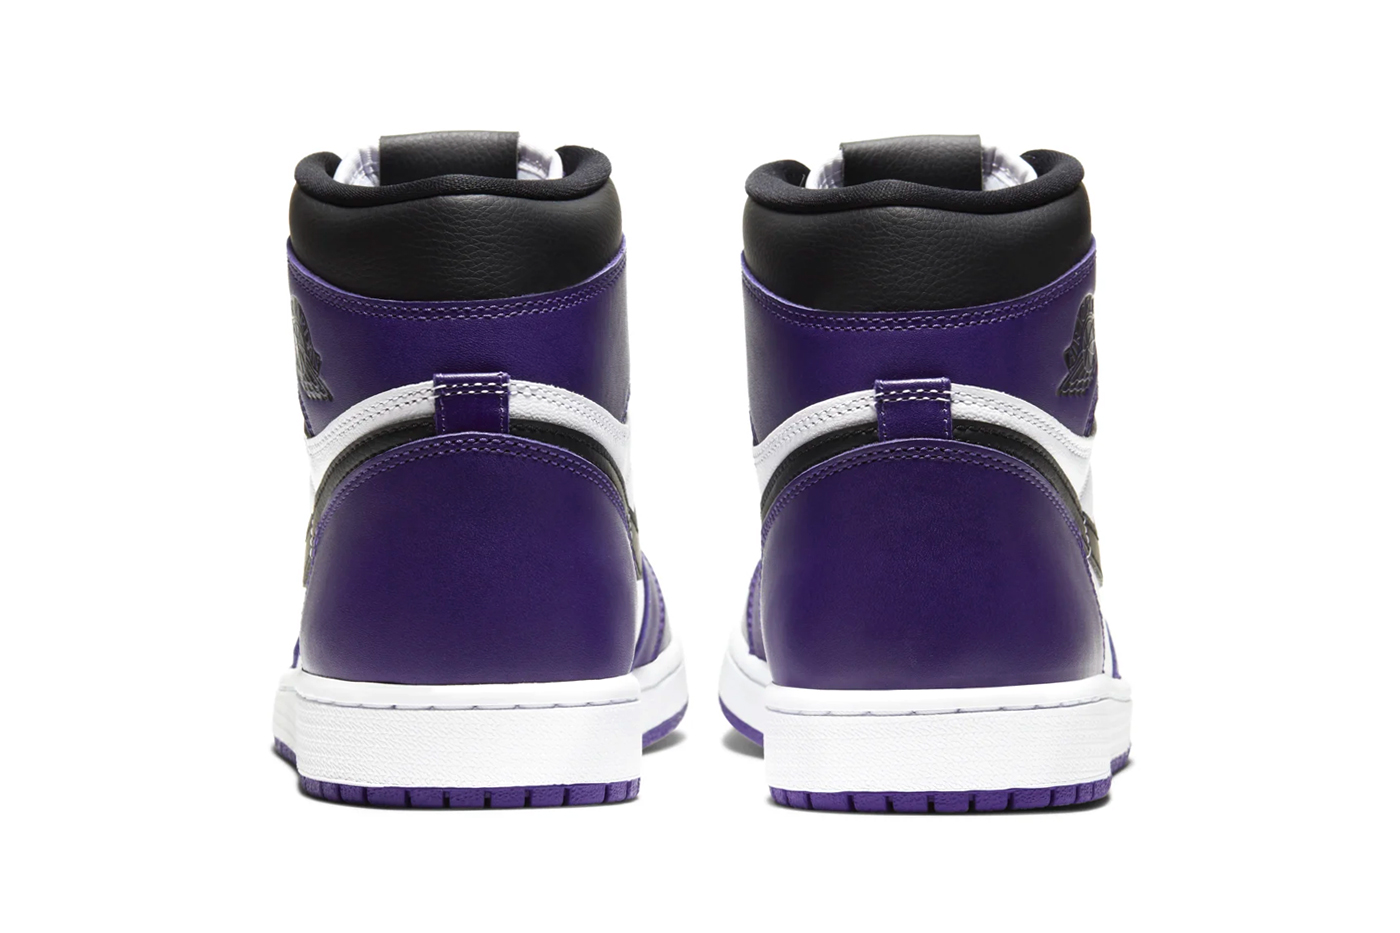 Air Jordan 1 Retro High OG "Court Purple" 2020 | Drops | Hypebeast